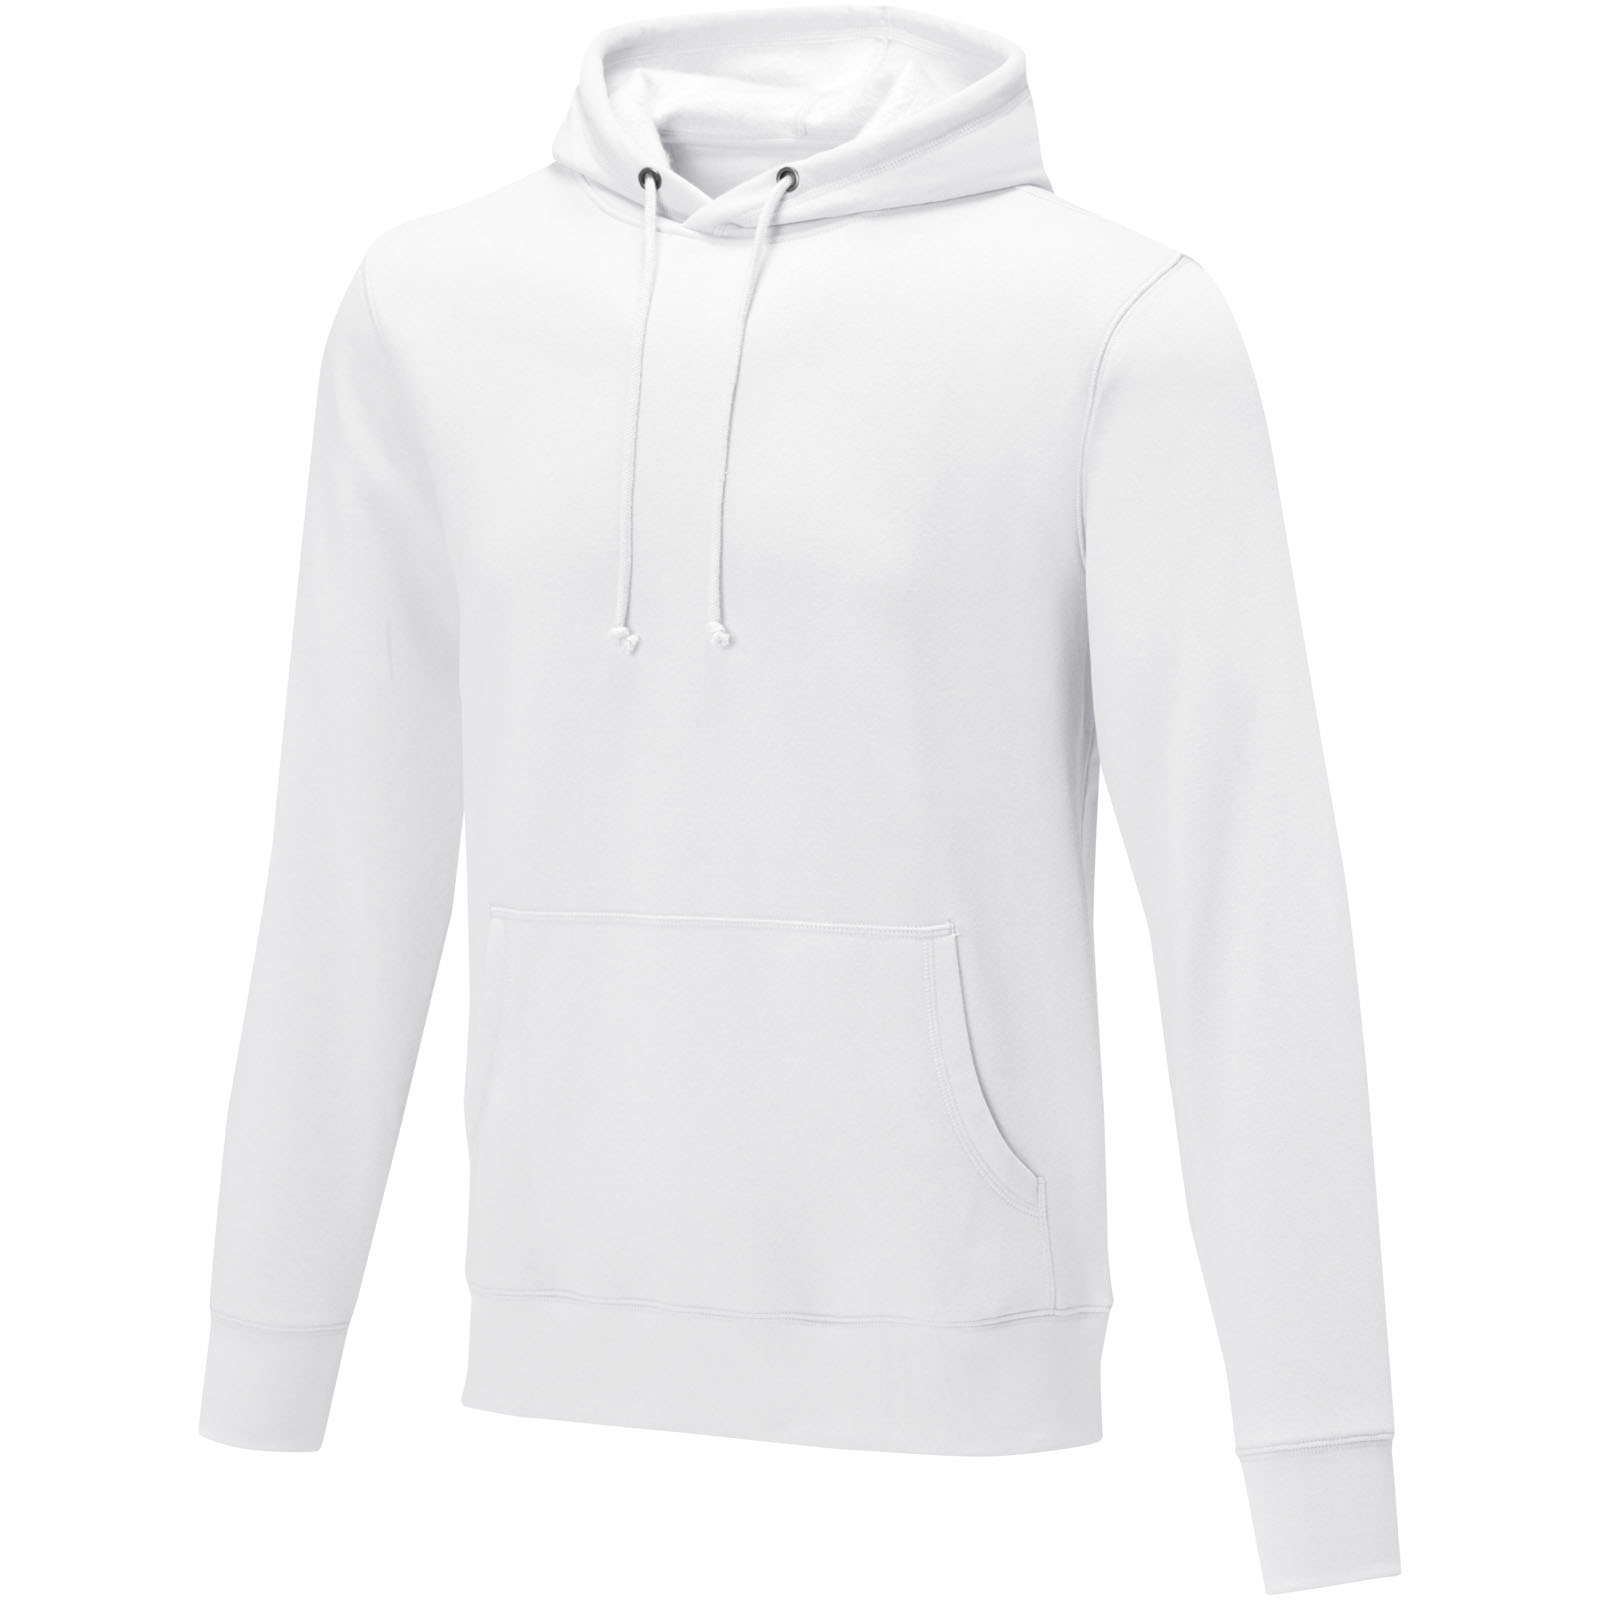 Clothing - Charon men’s hoodie